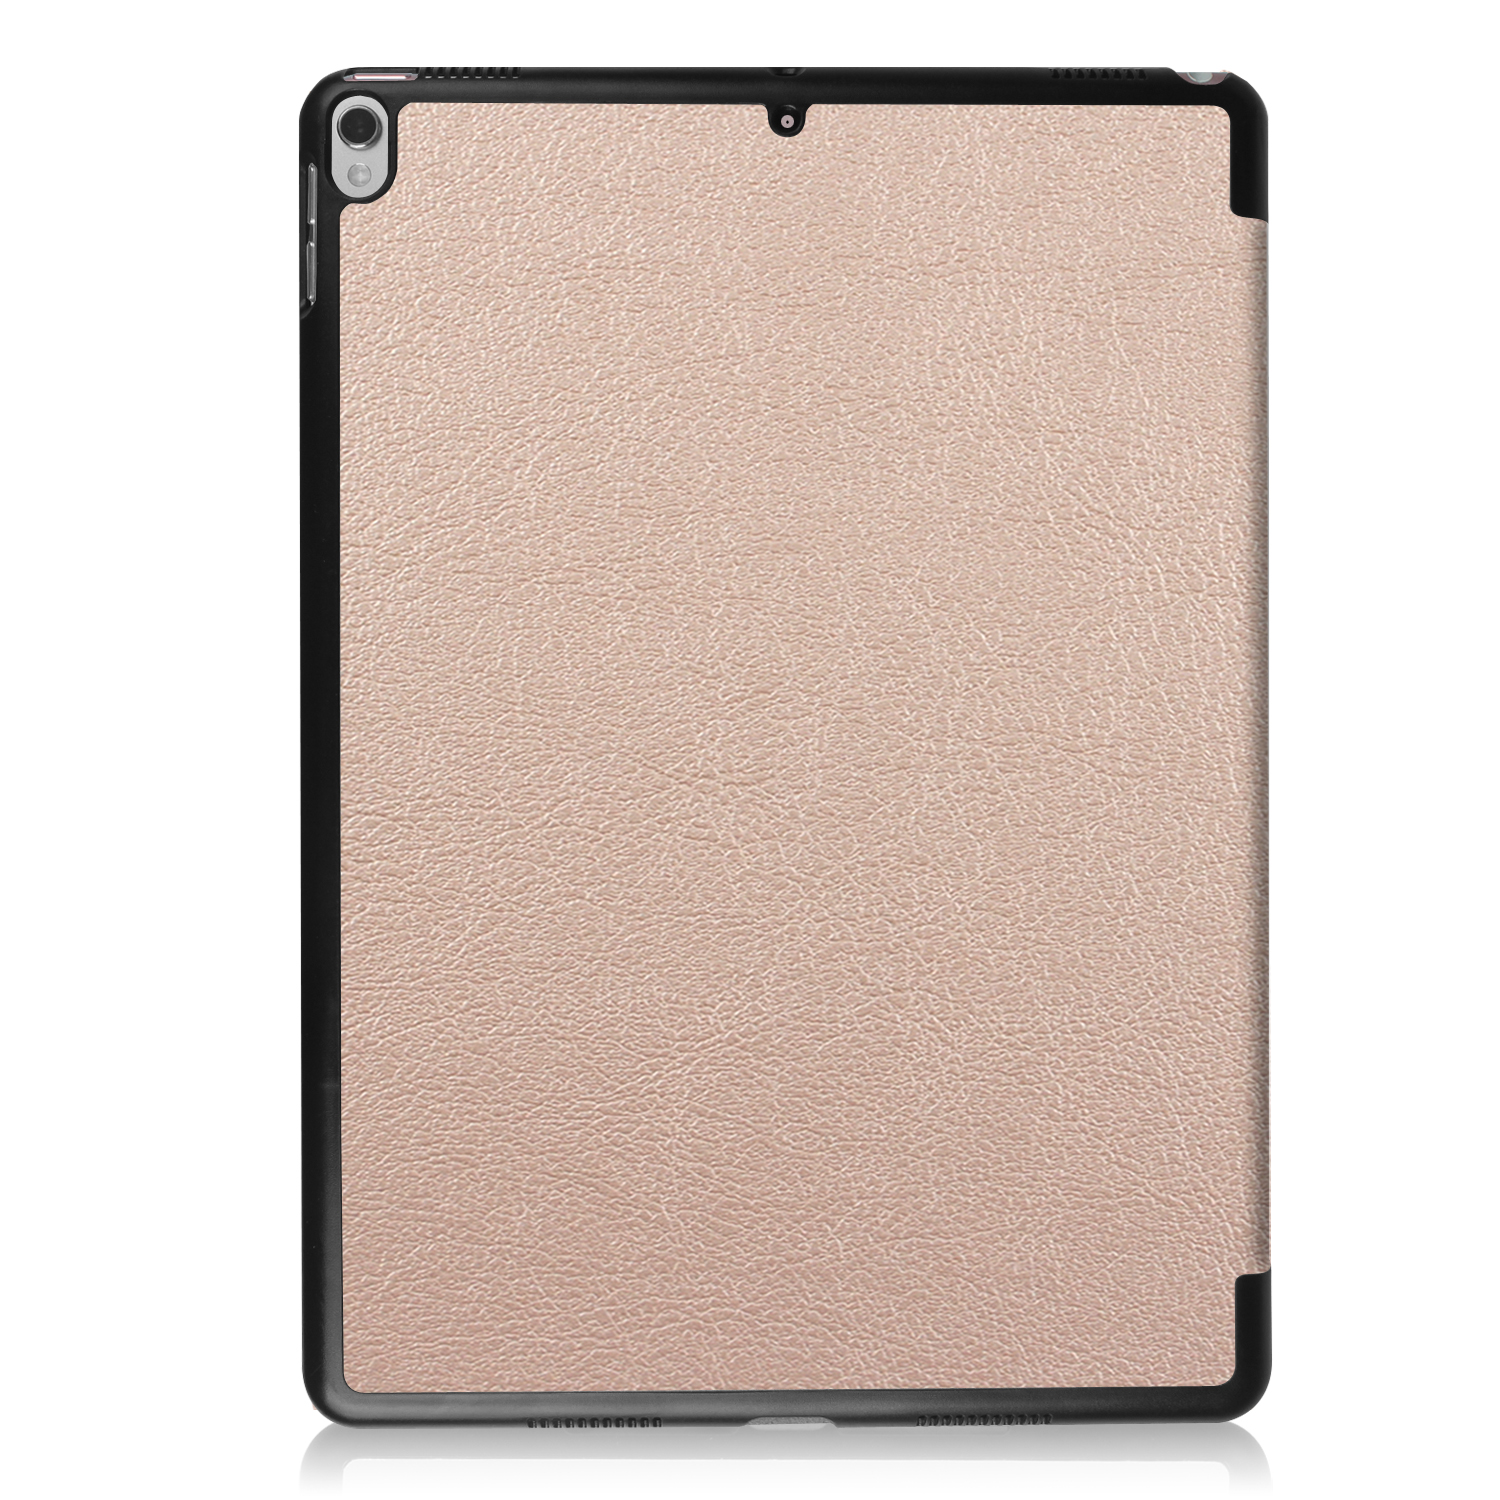 Pro 3 Schutzhülle Apple 2019 Hülle bronze 2017 für Kunstleder, iPad Air Zoll 10.5 iPad LOBWERK Bookcover